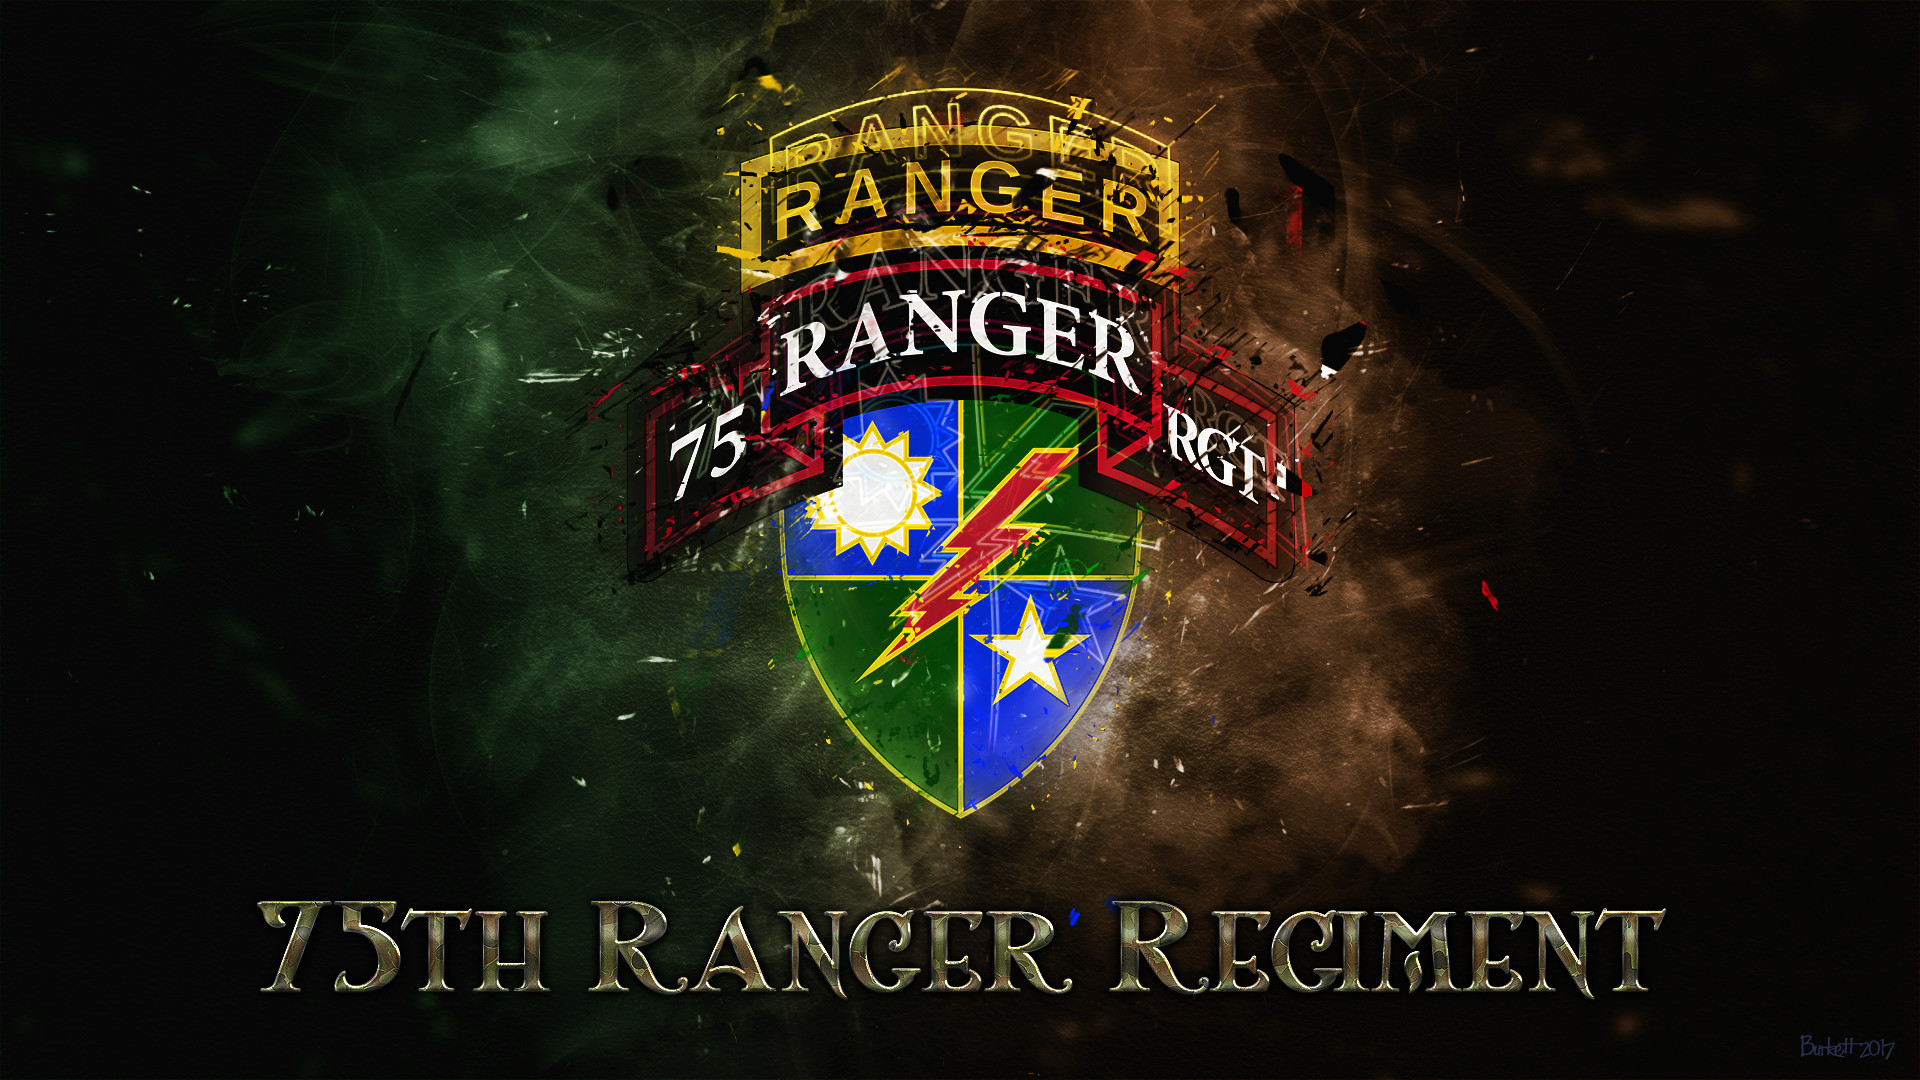 1920x1080 Total images at this level png  75th ranger regiment crest  wallpaper